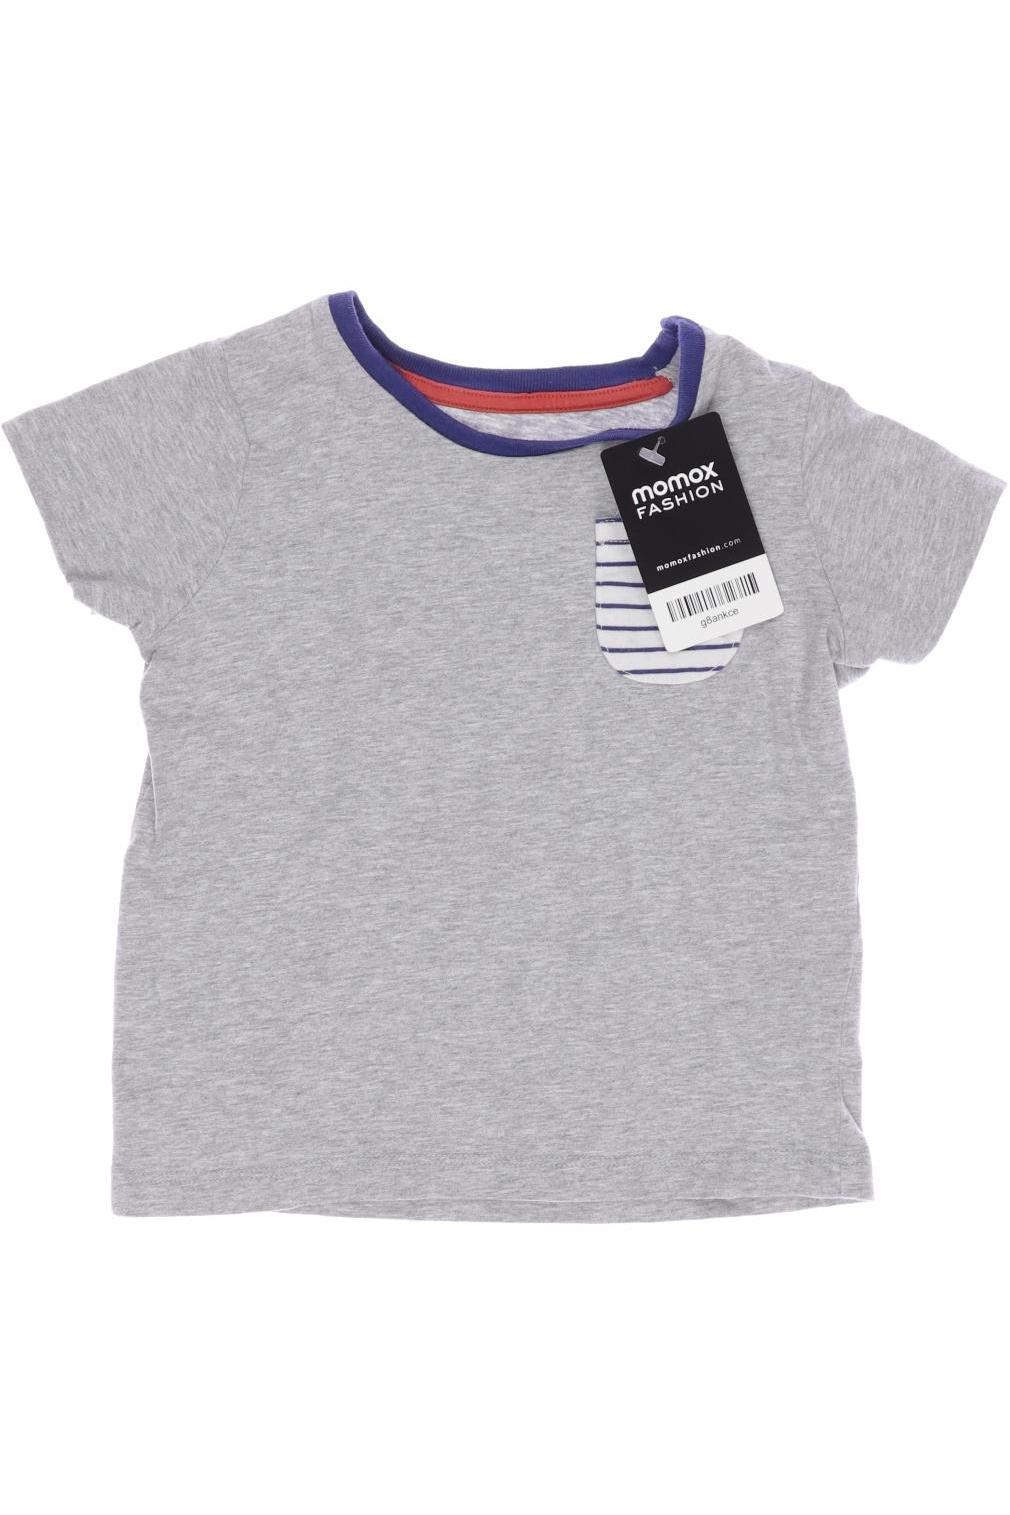 Mini Boden Herren T-Shirt, grau, Gr. 104 von Mini Boden